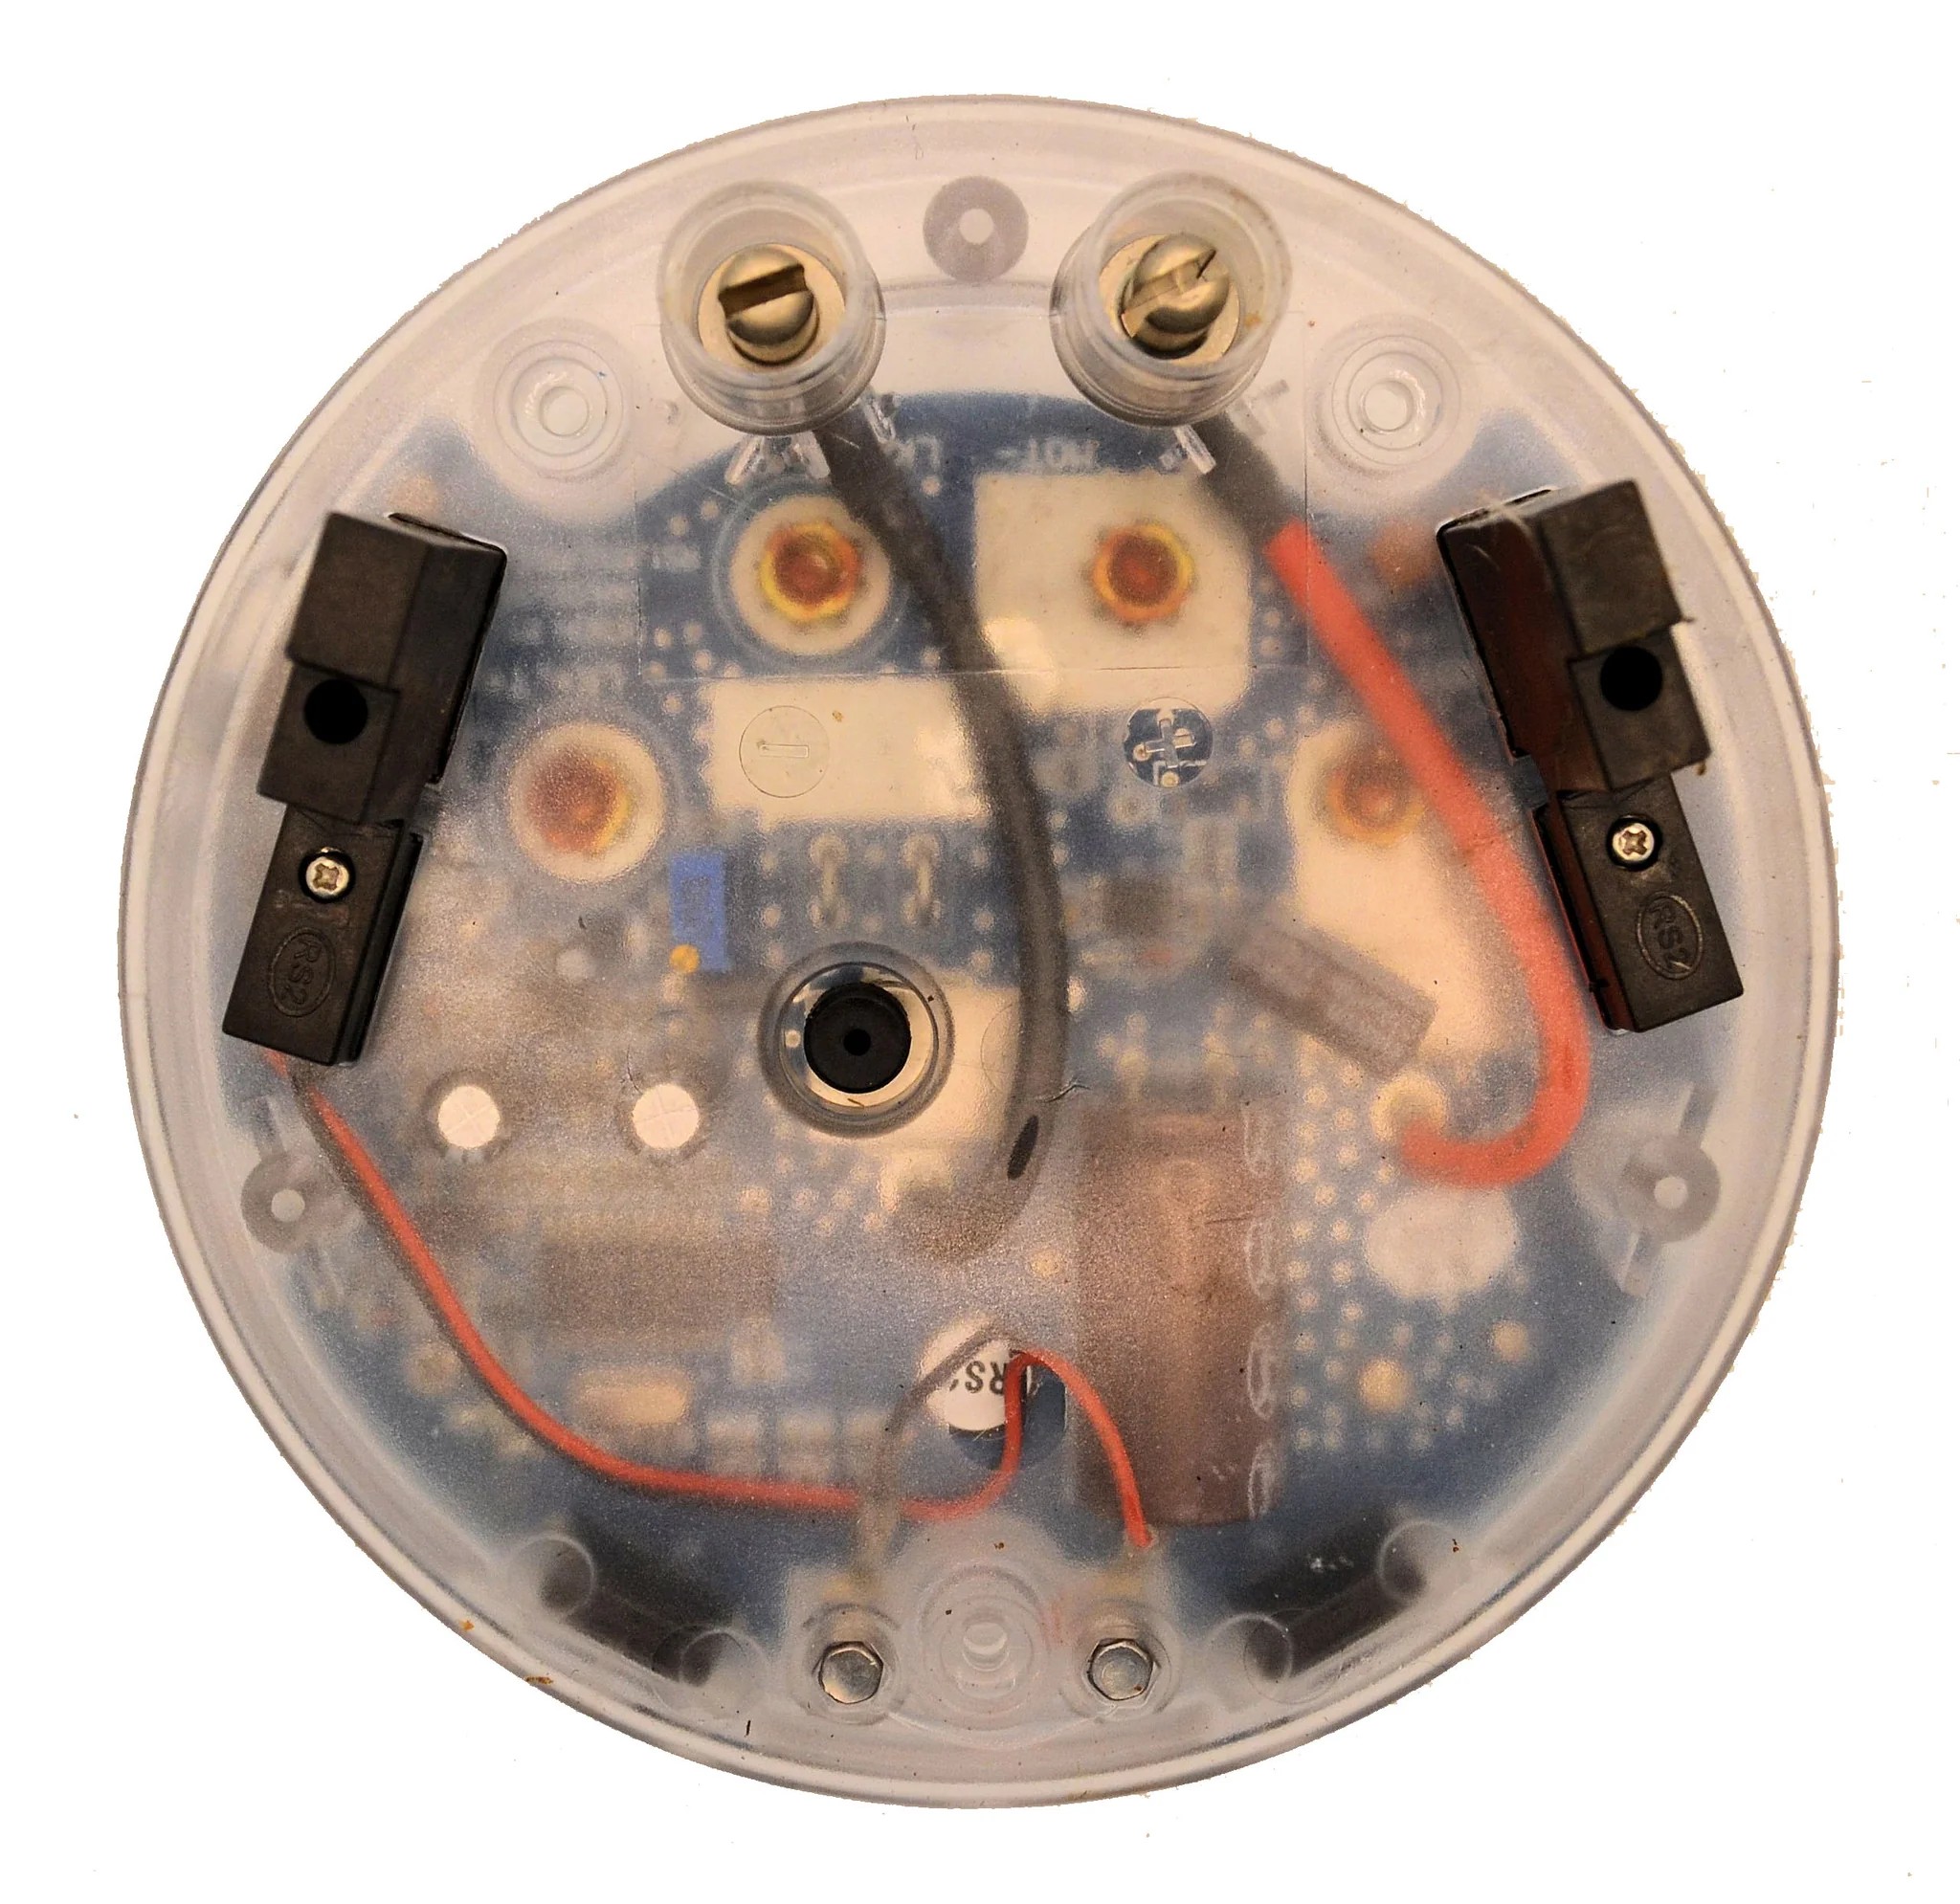 Circuit board 350LI (NZZ169A)